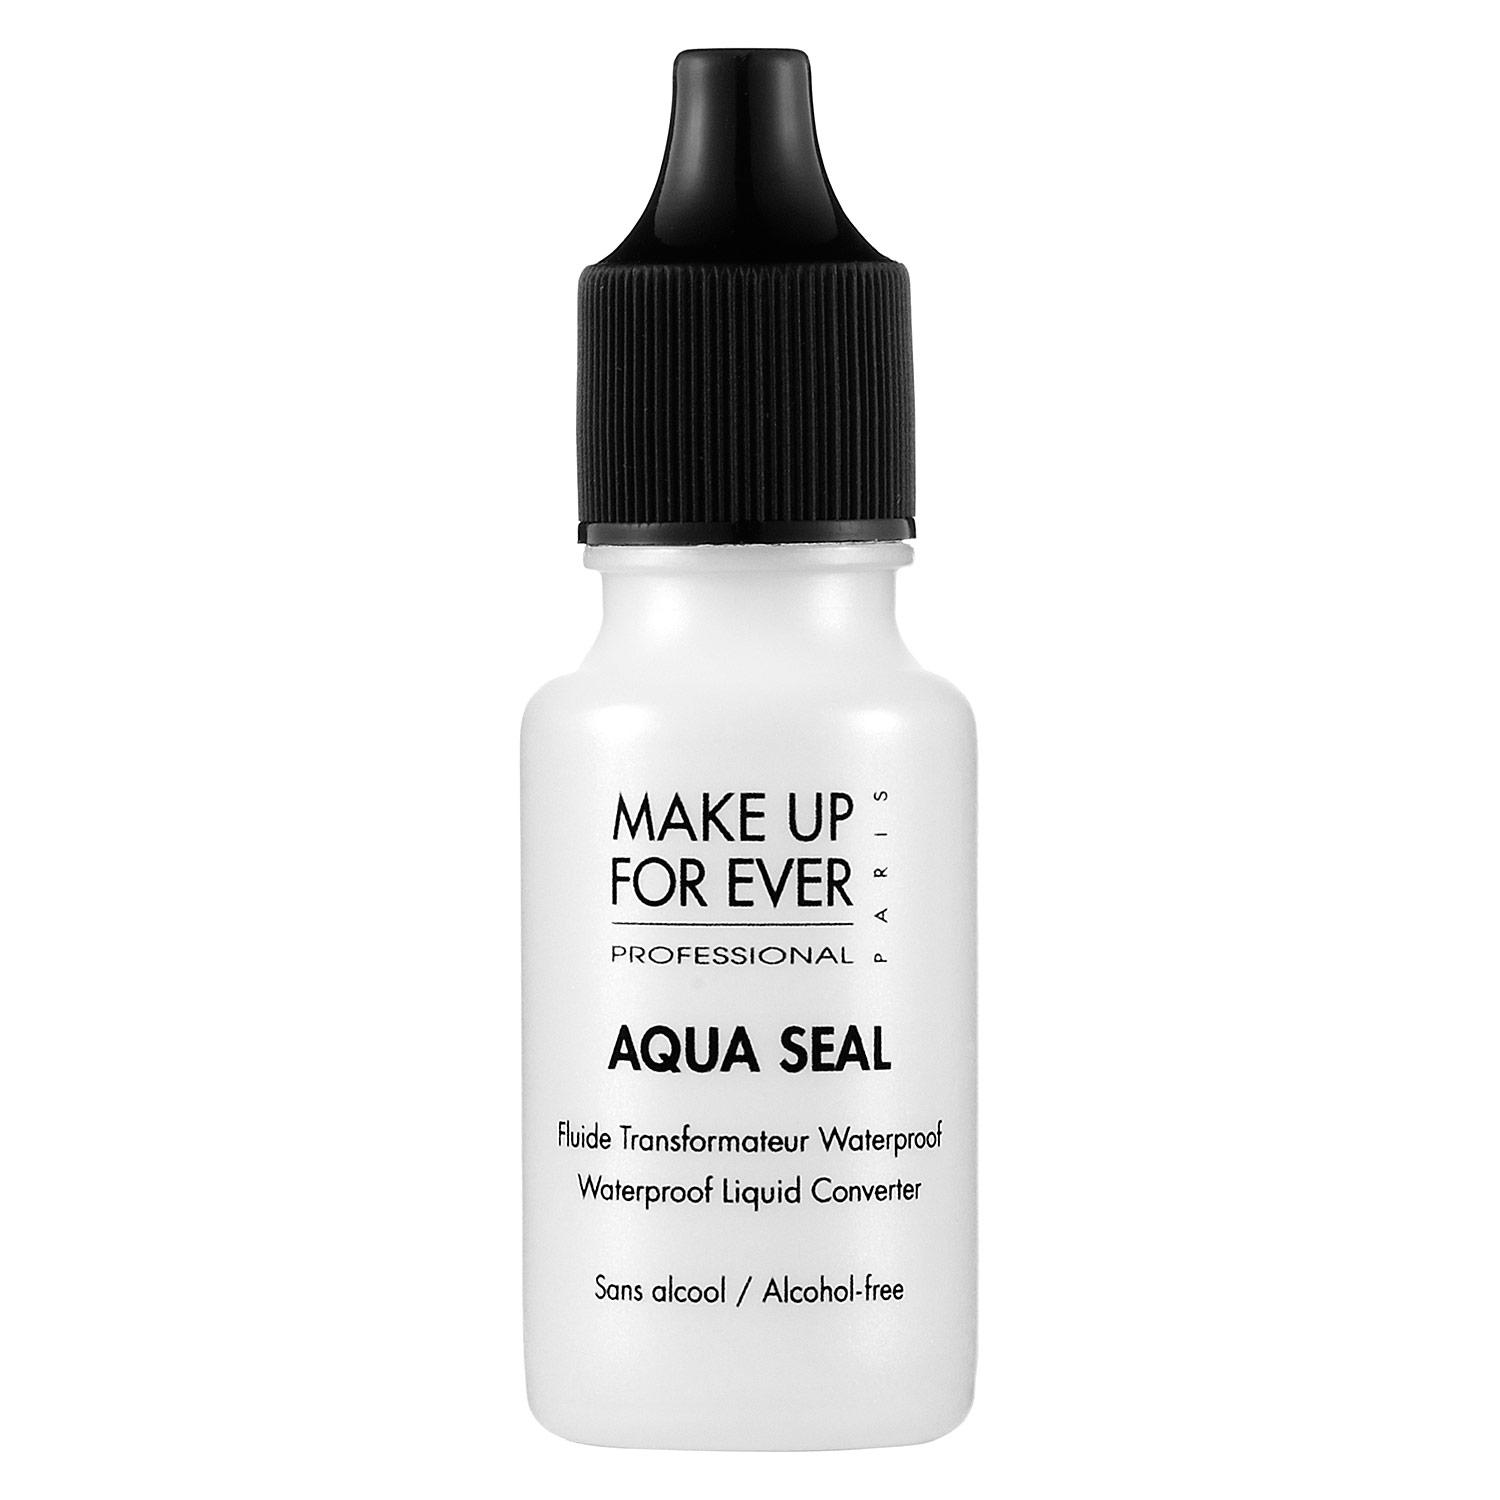 Makeup Forever Aqua Seal Waterproof Liquid Converter